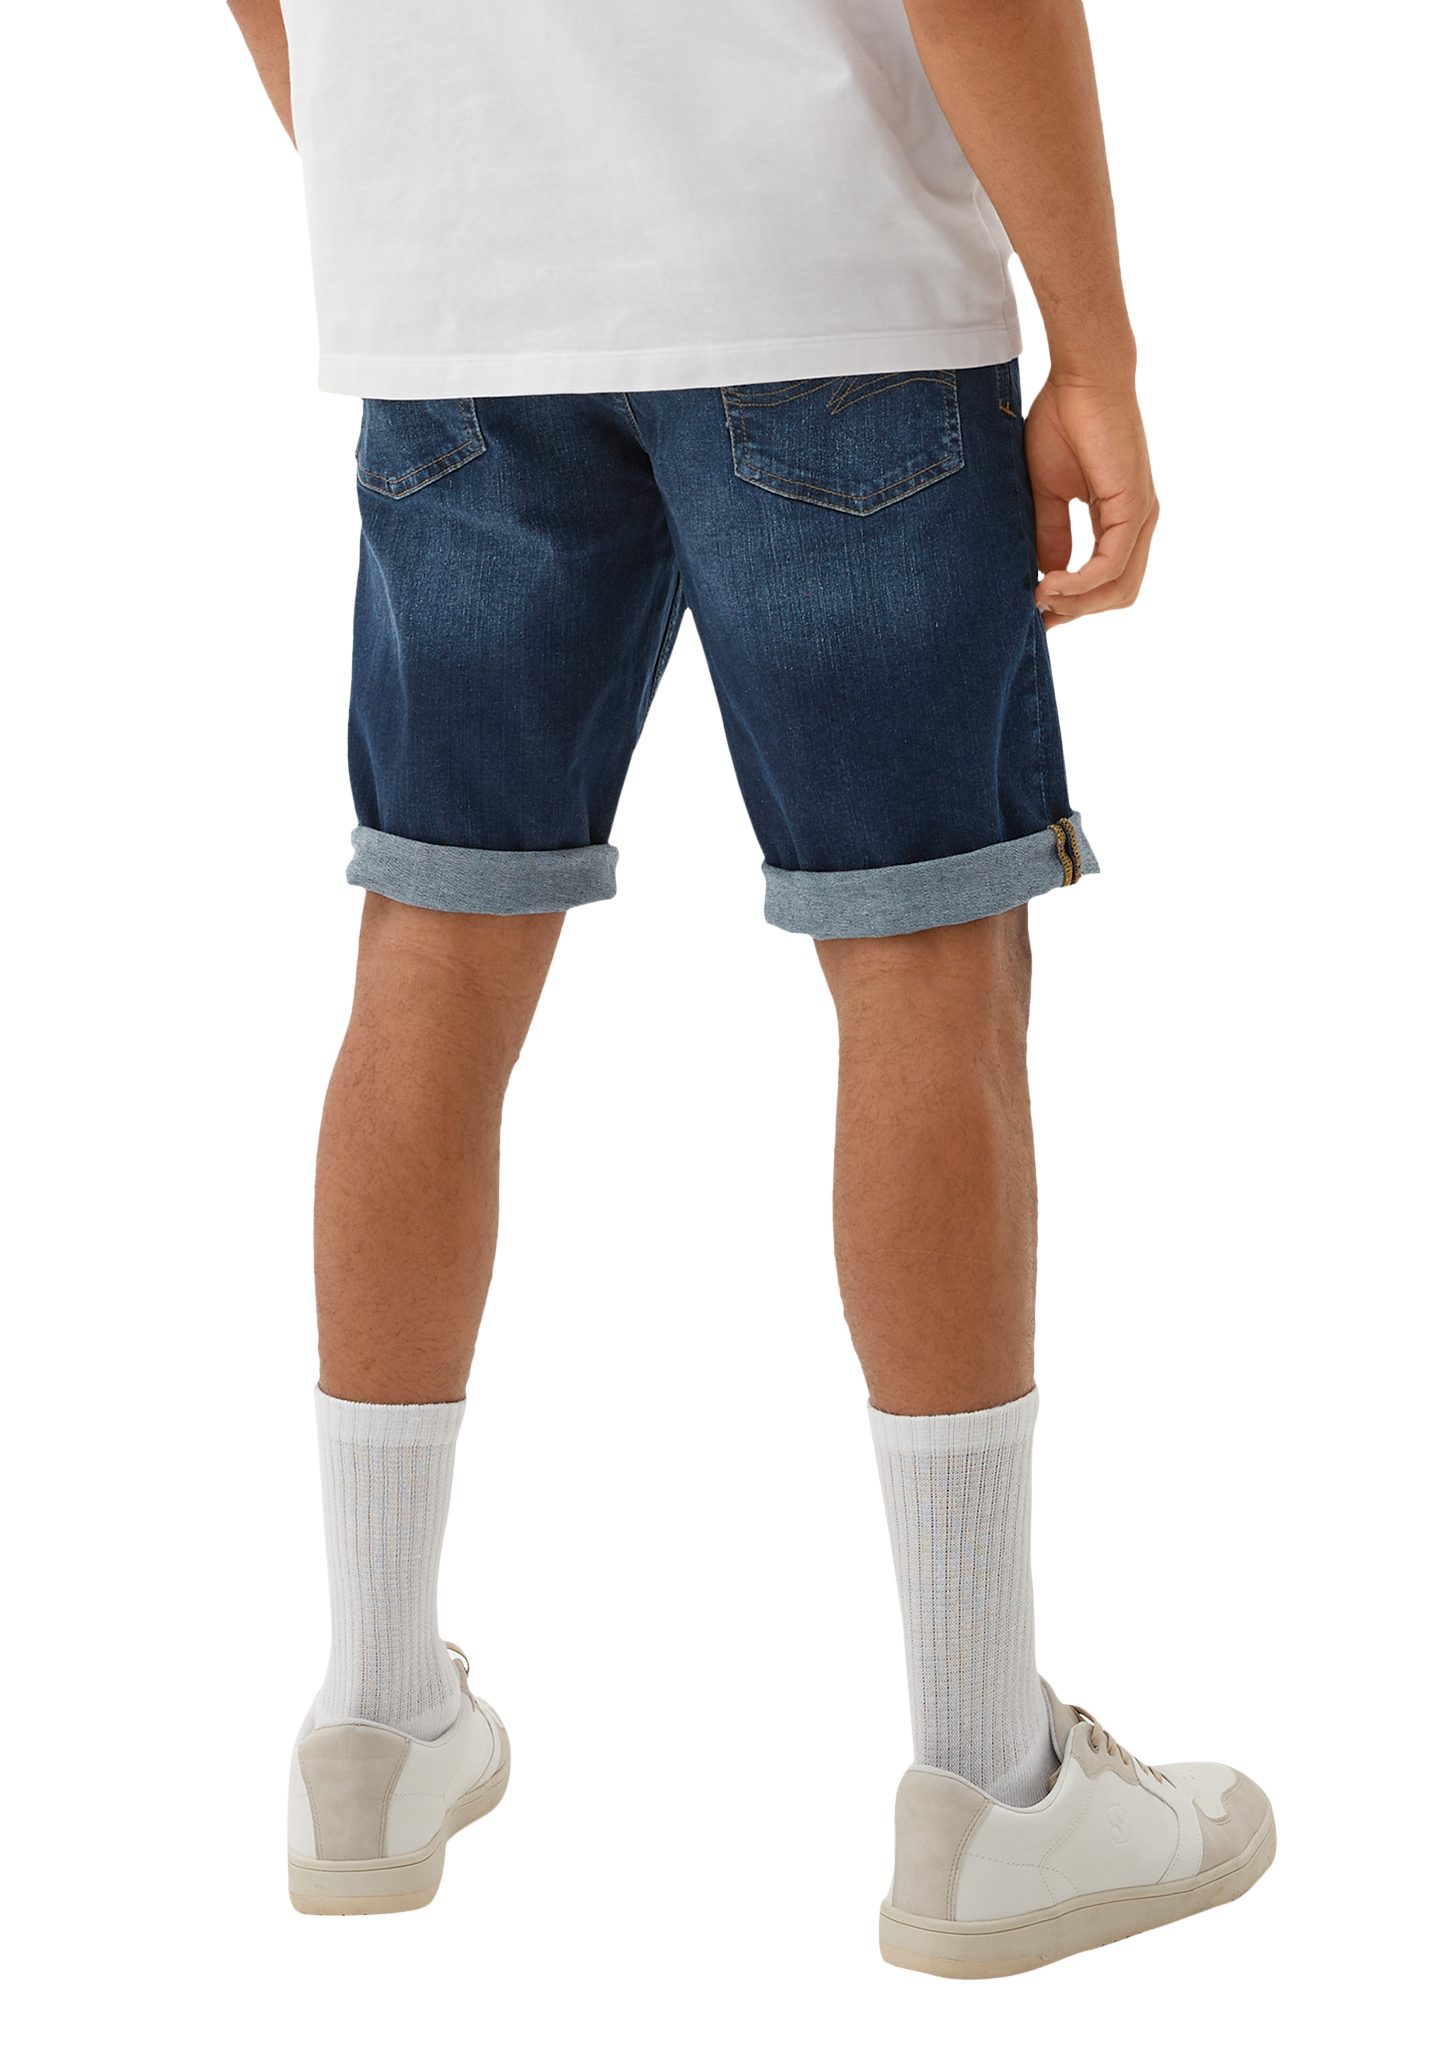 QS Jeansshorts Jeans-Bermuda / John Leg Regular Fit dunkelblau Straight / Rise Mid Waschung 